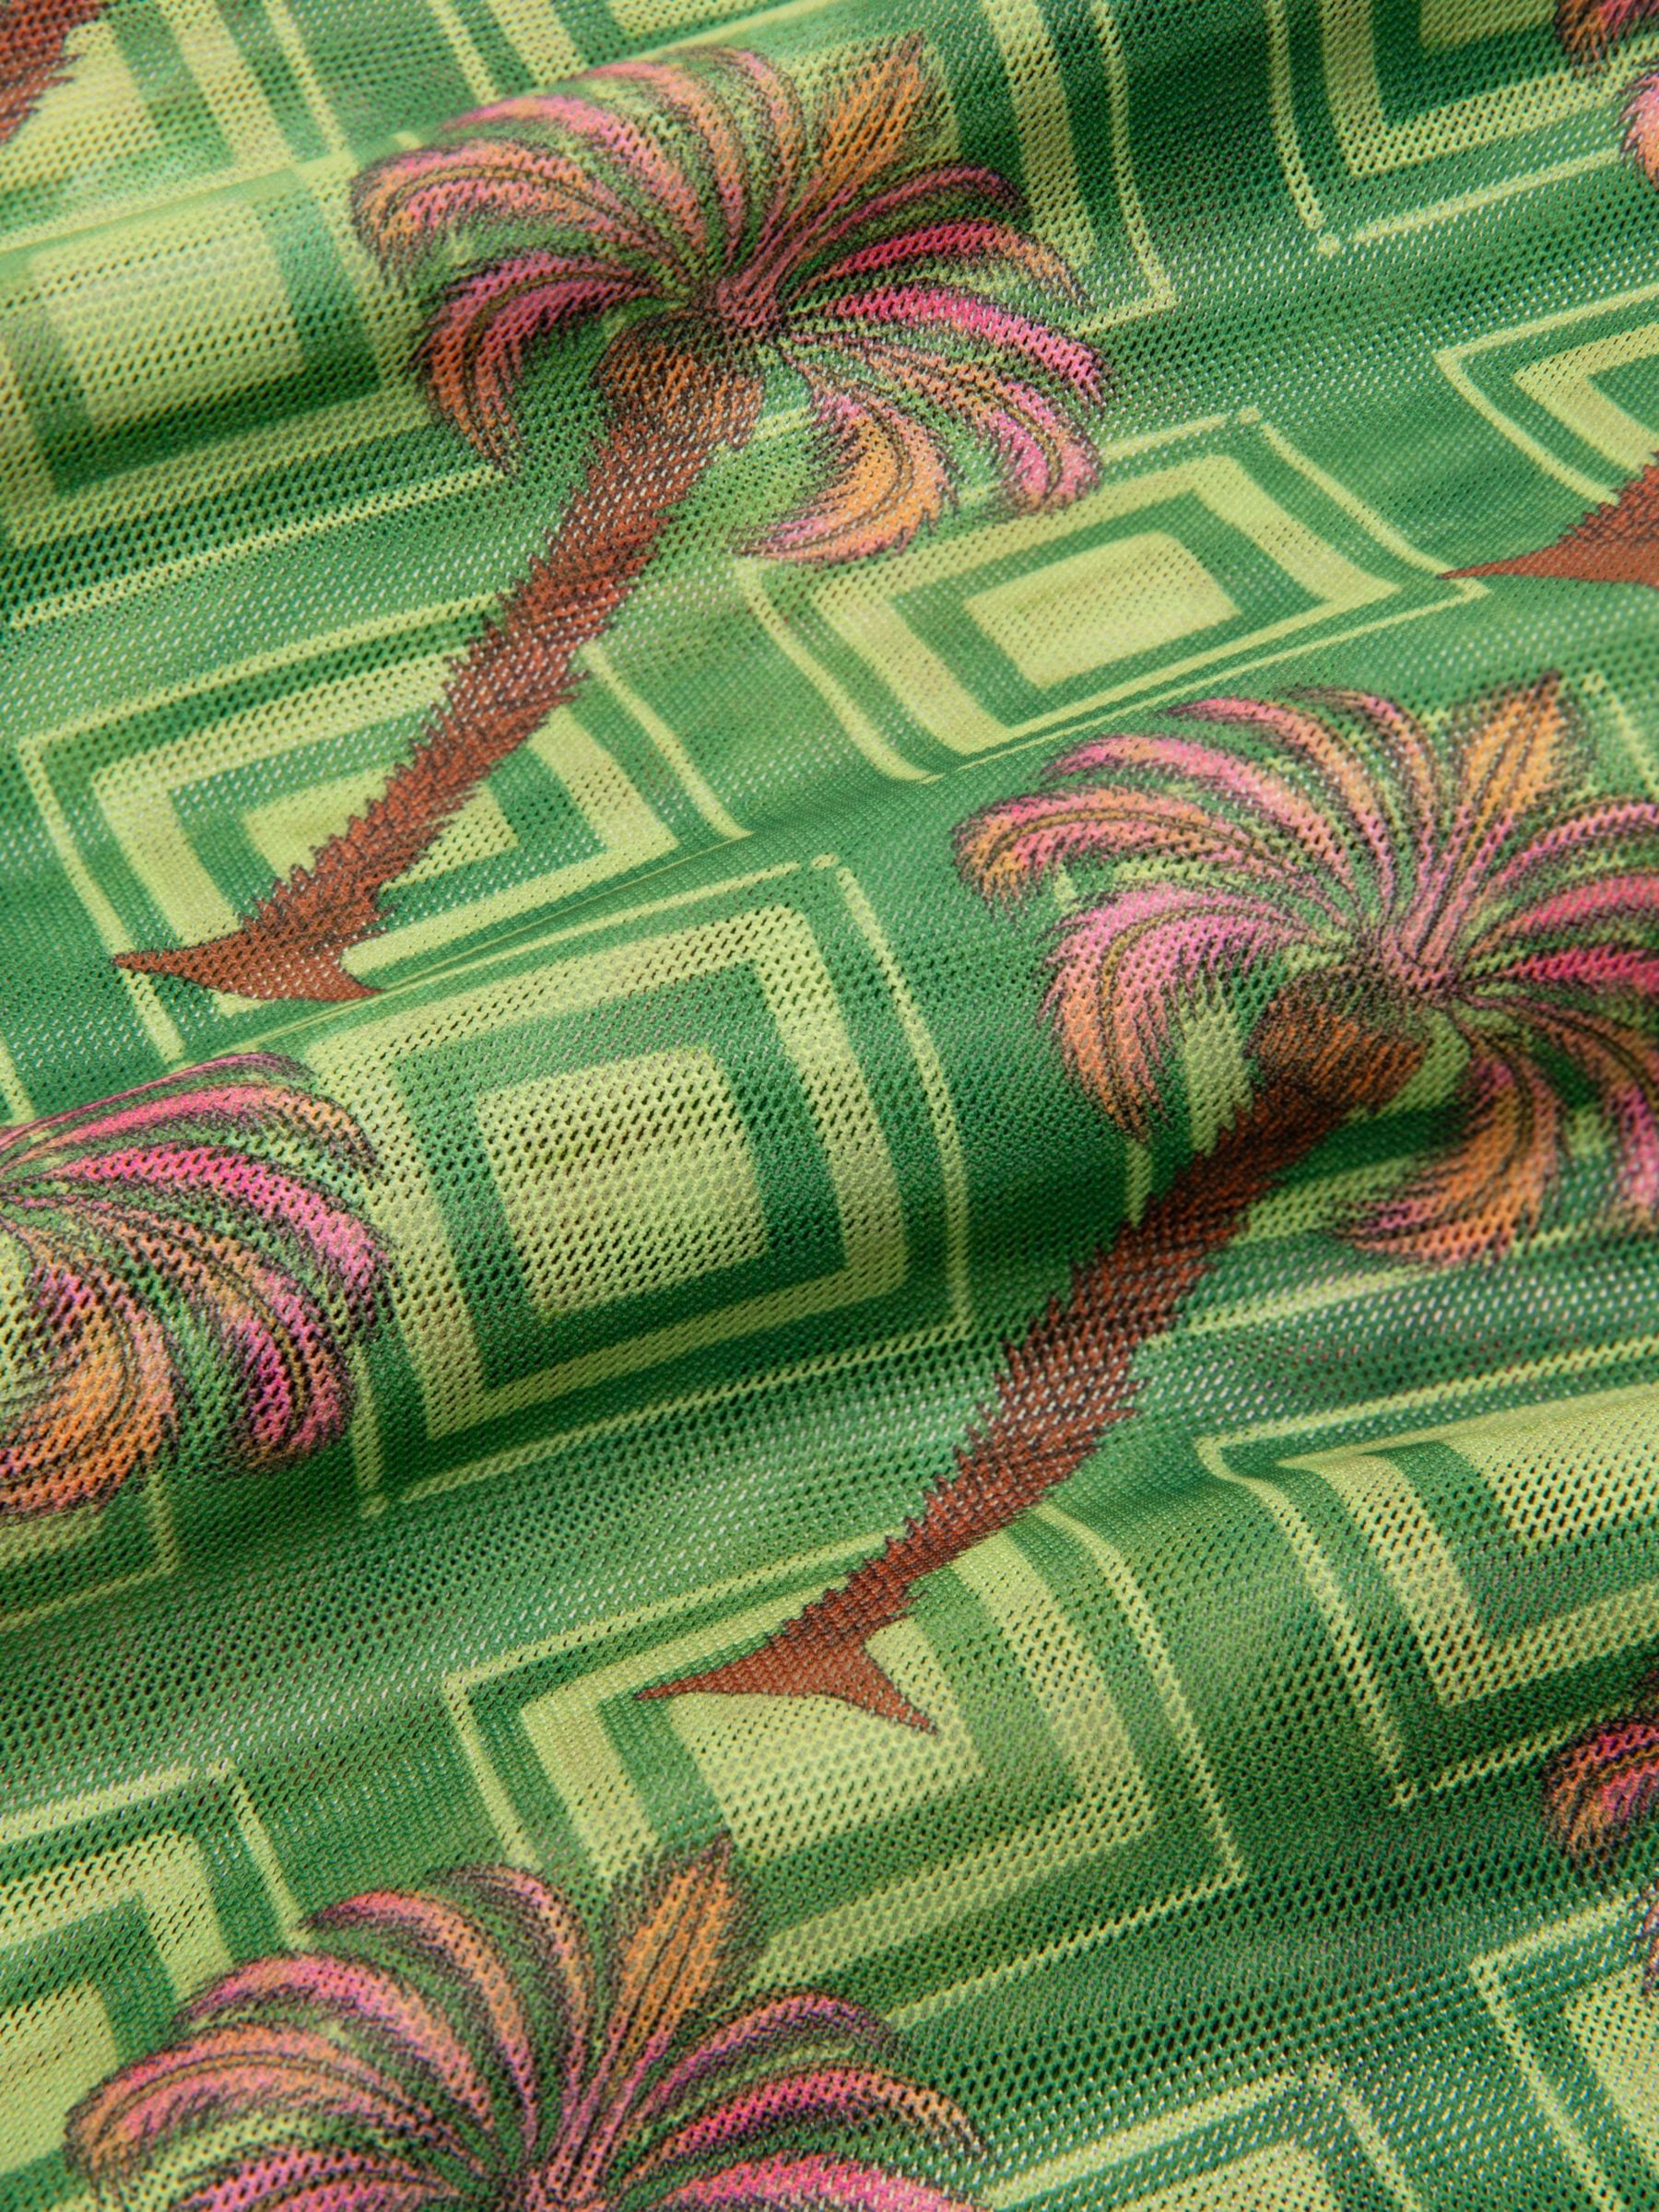 Chelsea Peers Mesh Geometric Palm Print Tie-Front Kaftan, Khaki/Multi, L